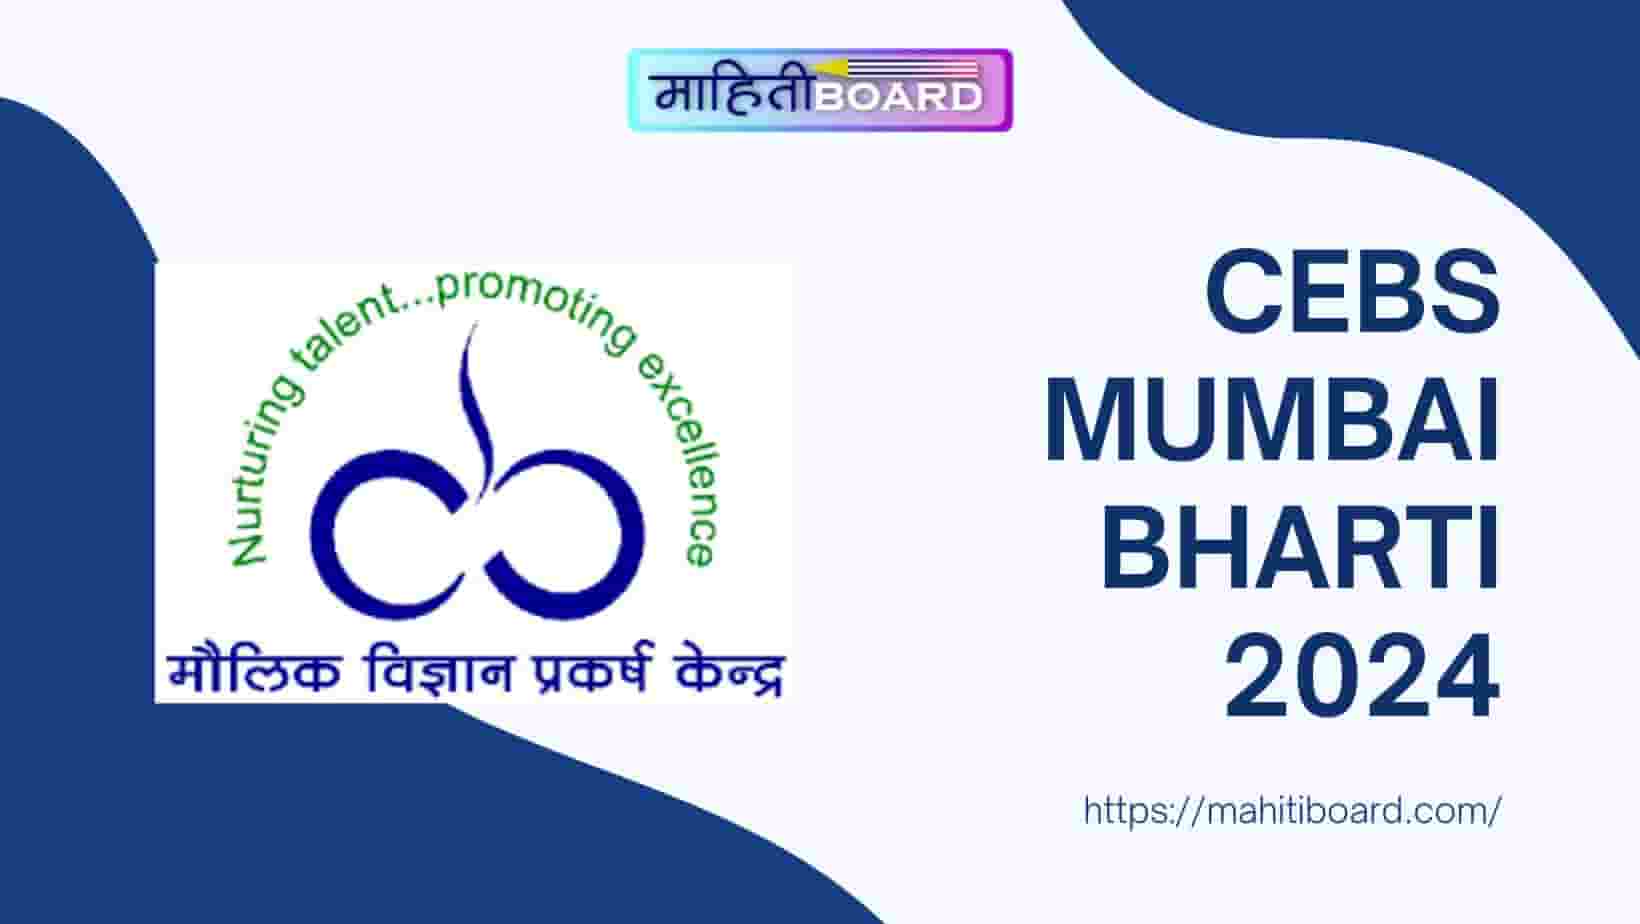 CEBS Mumbai Bharti 2024